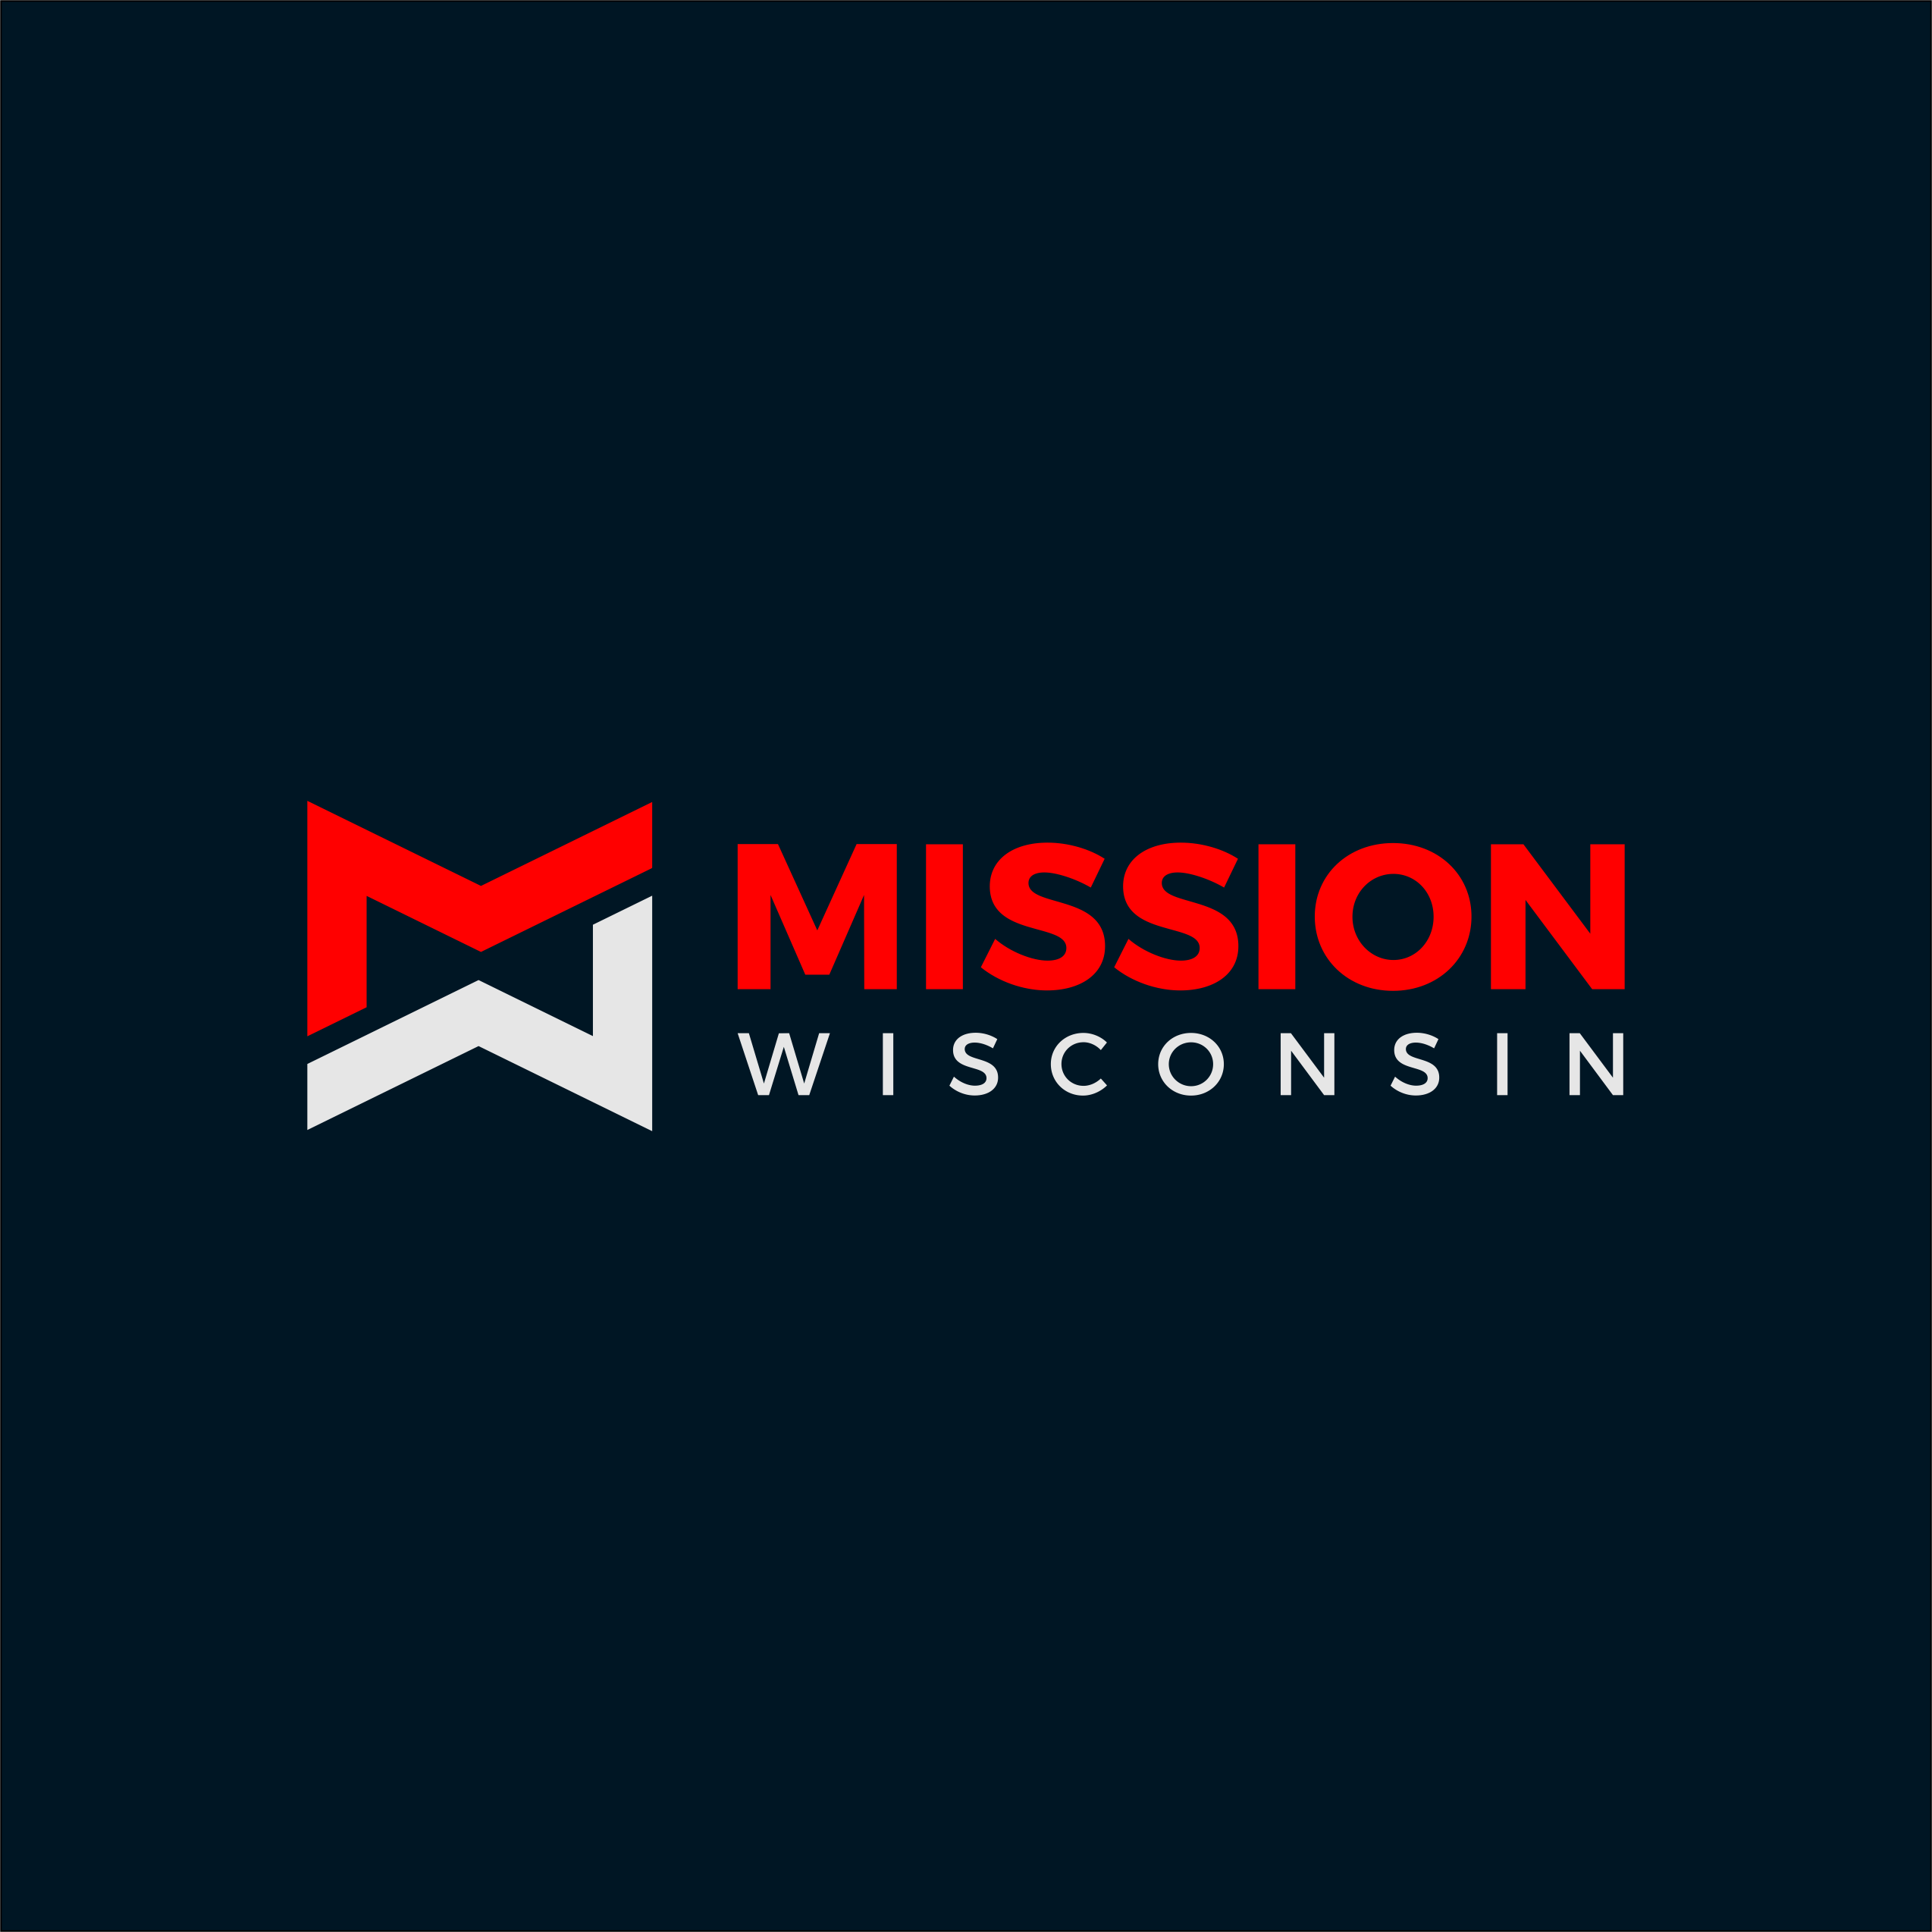 Mission Wisconsin logo